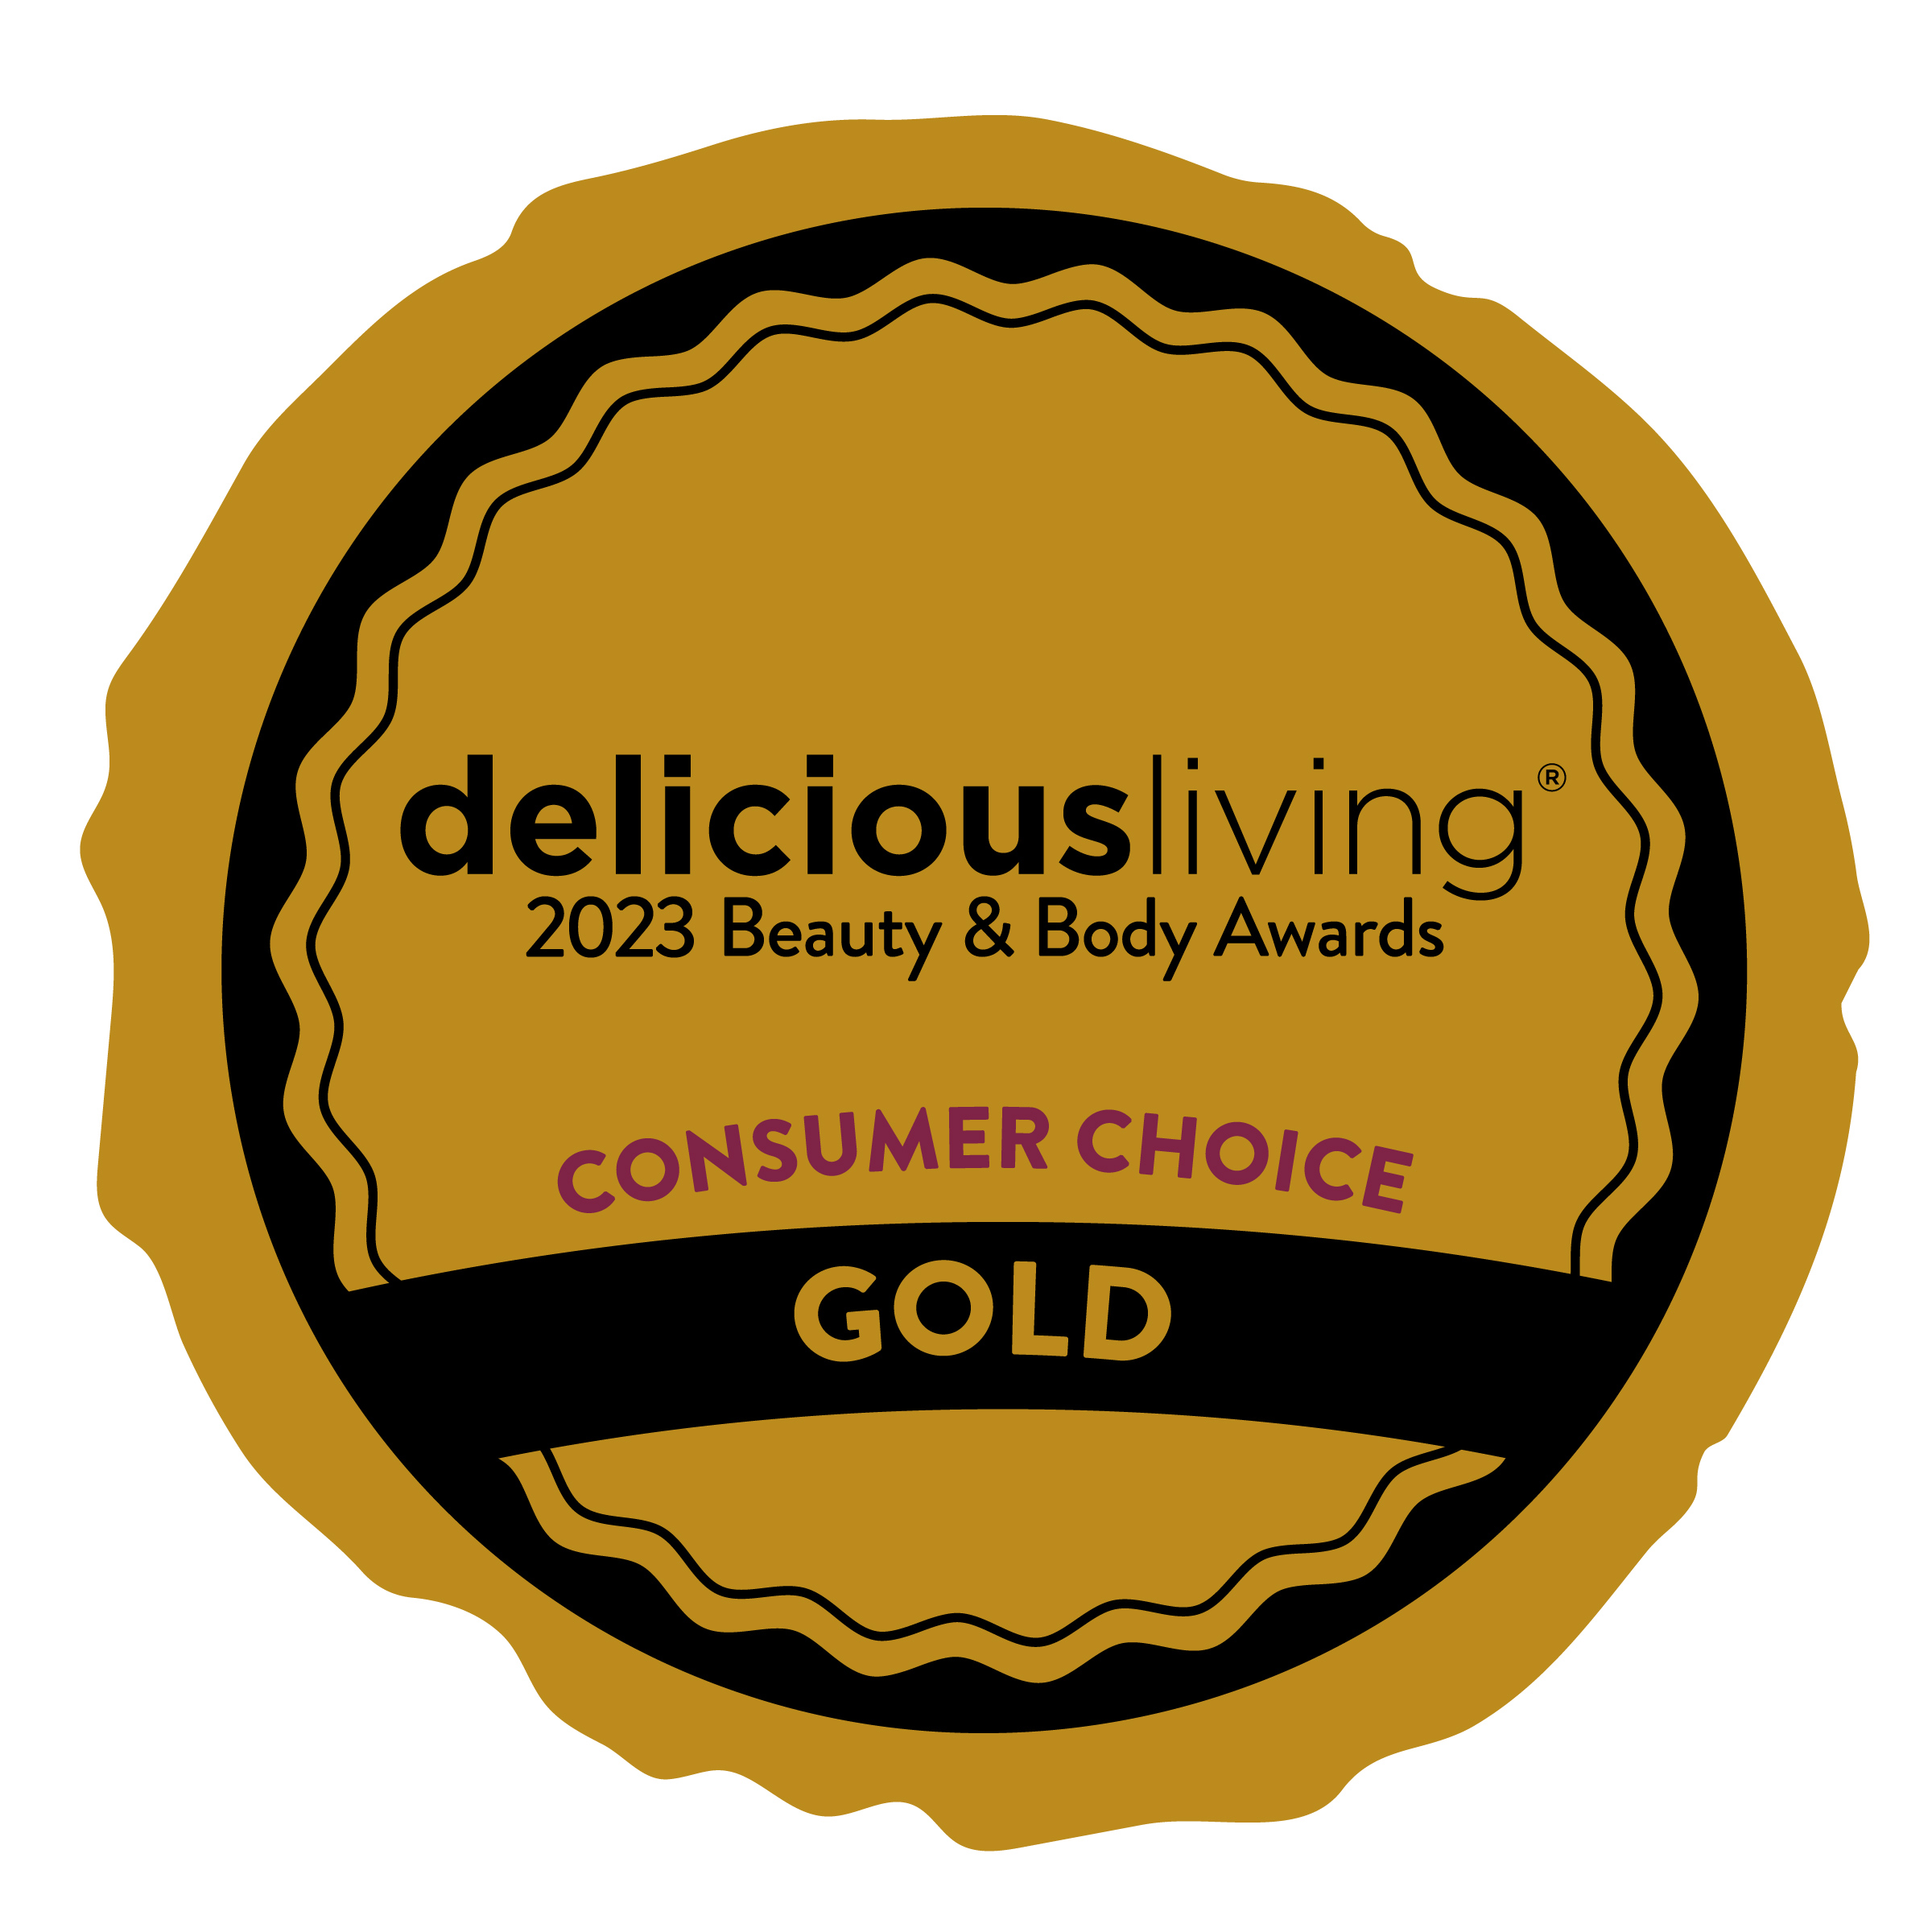 Desert Essence Foaming Hand Soap Pods Starter Kit, Lemongrass Wins Gold in Delicious Living 2023 Body and Beauty Awards - Consumer Hand Care Category